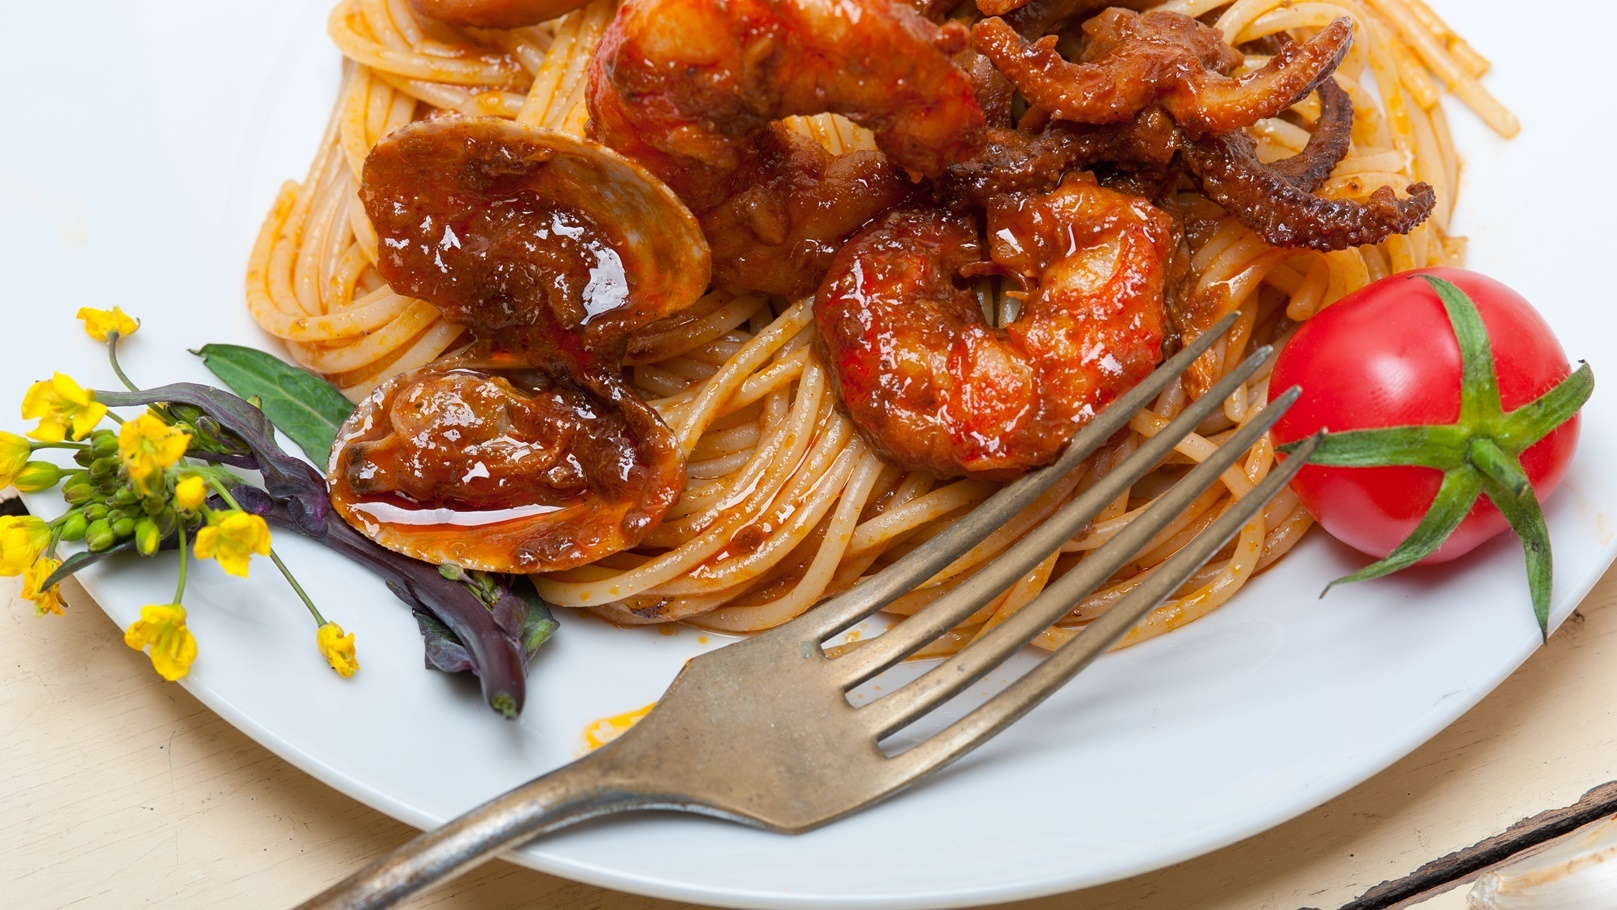 italian-seafood-spaghetti-pasta-on-red-tomato-sauc-2021-08-30-02-16-55-utc (1)